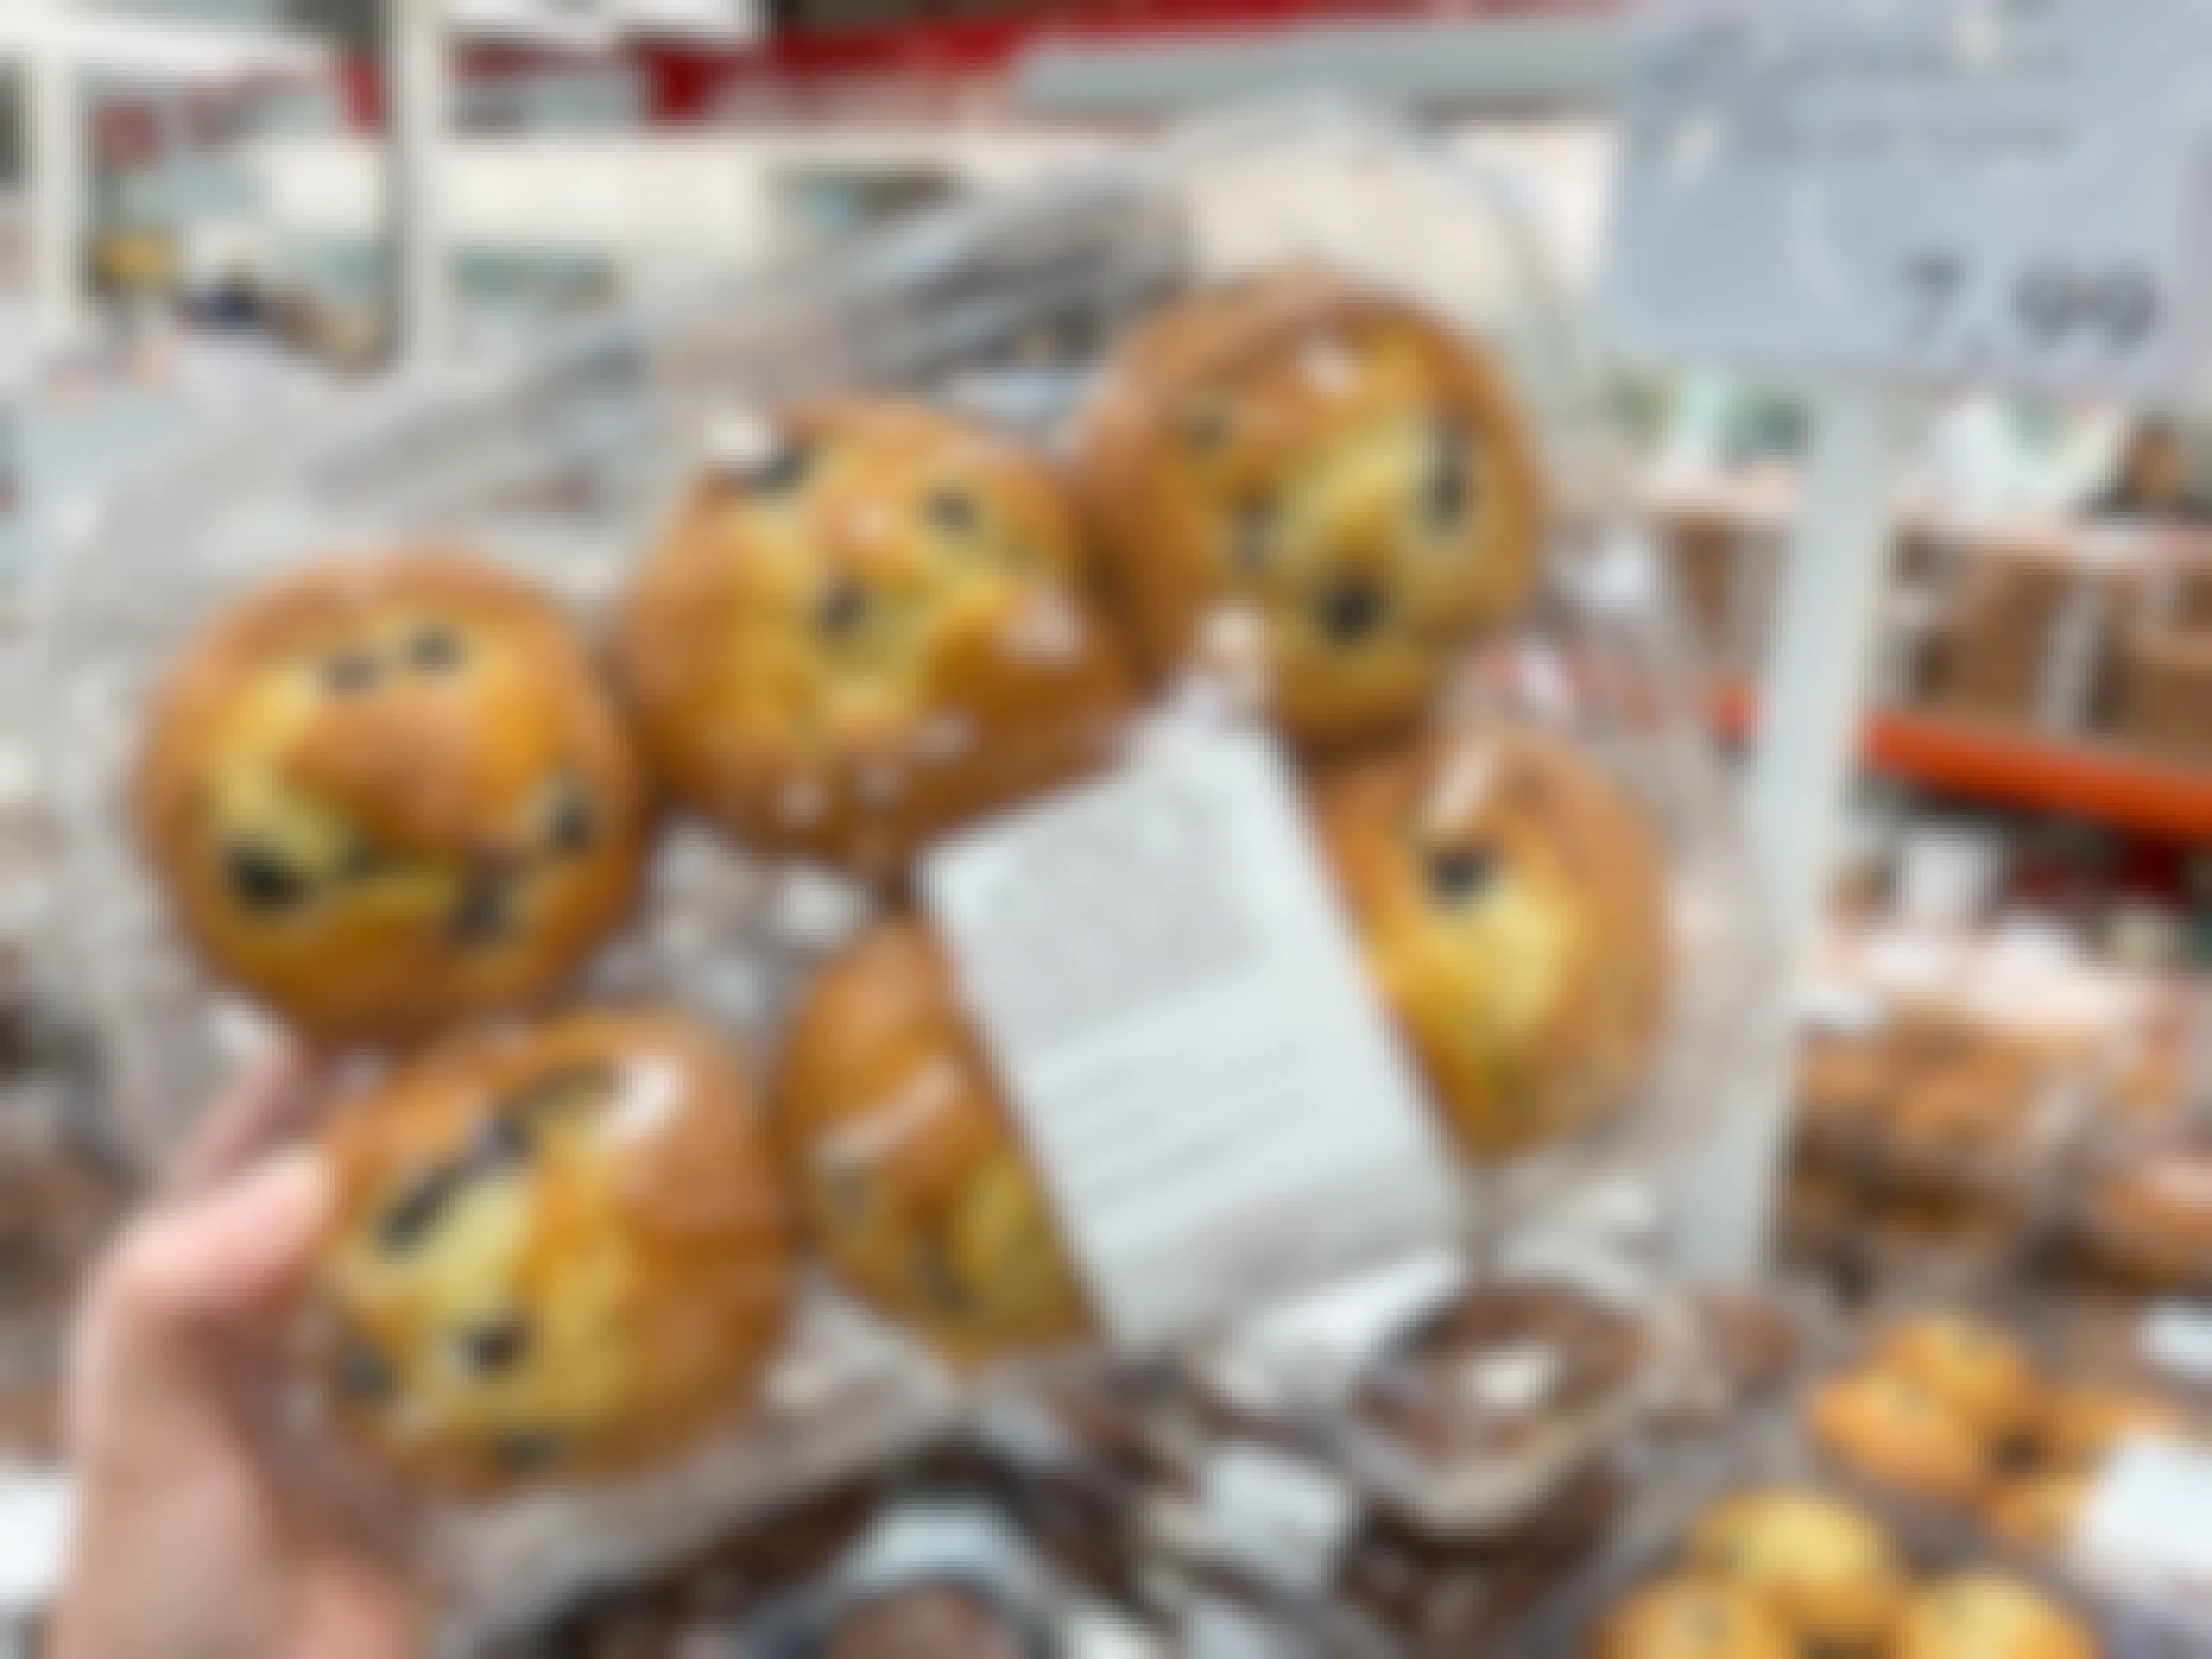 Blueberry Costco Muffins